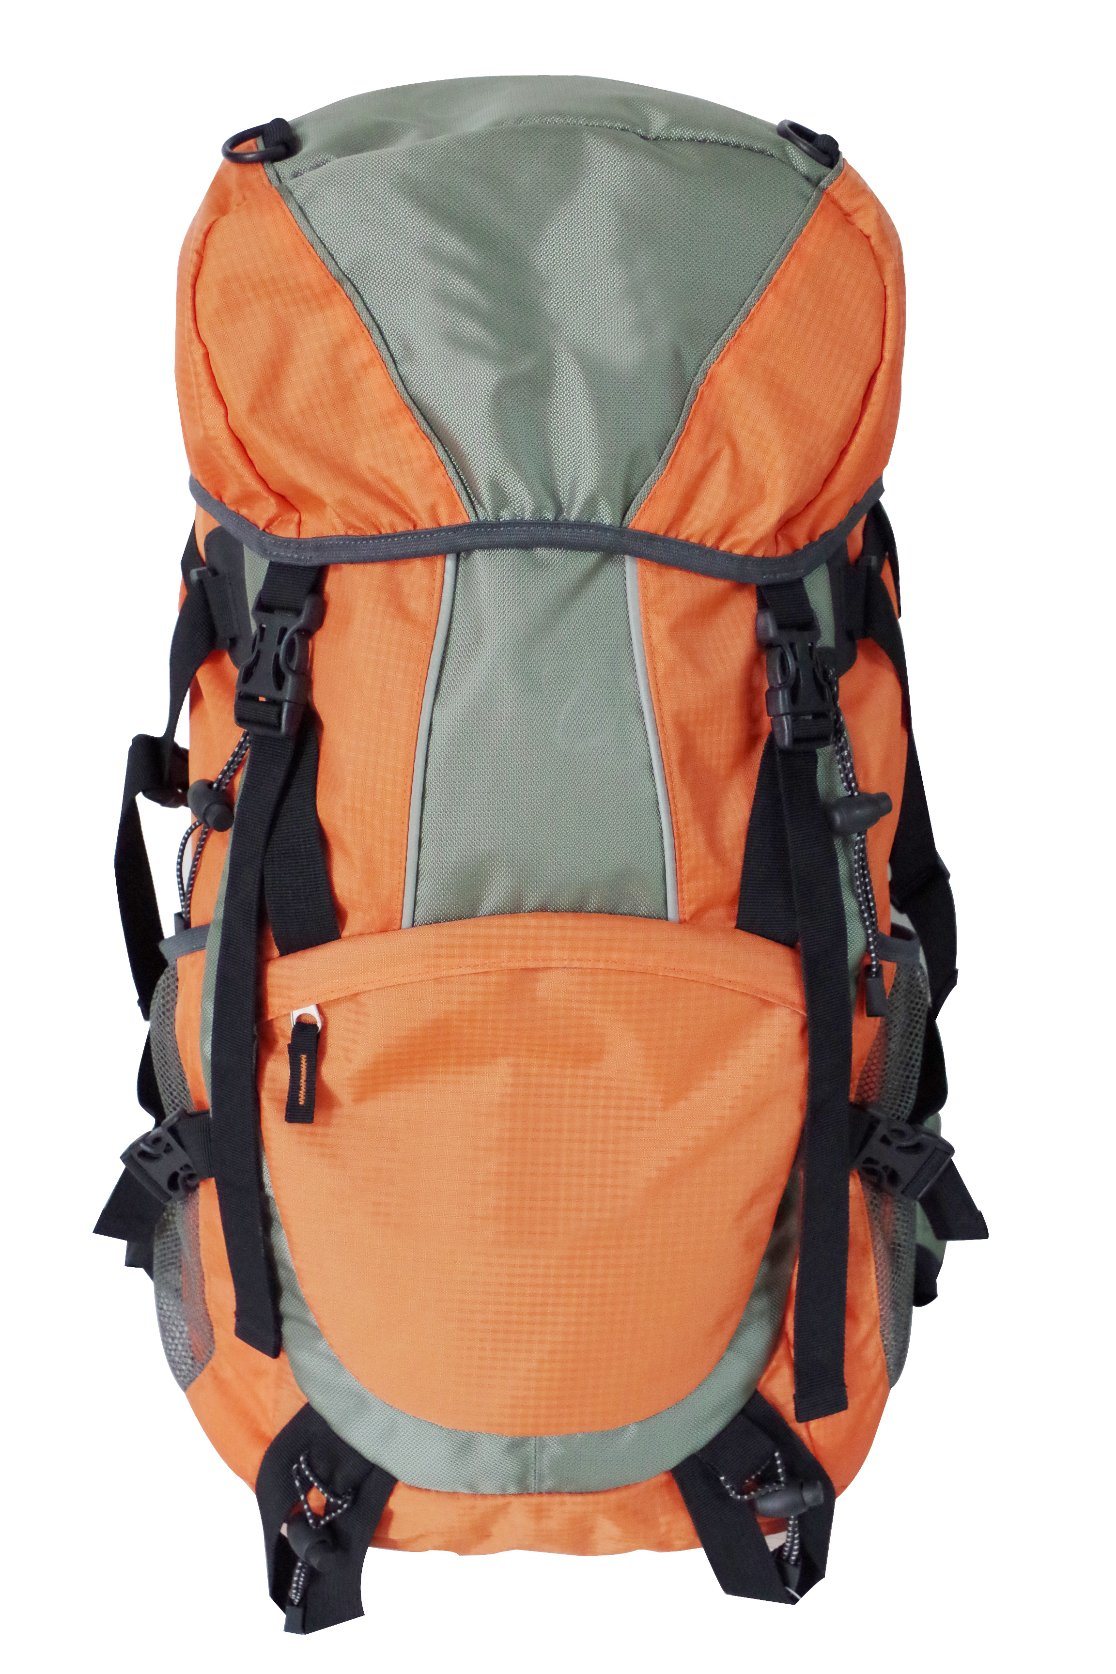 2017 Amazon Hot Sale Hikking Sport Backpack Sh-17011804